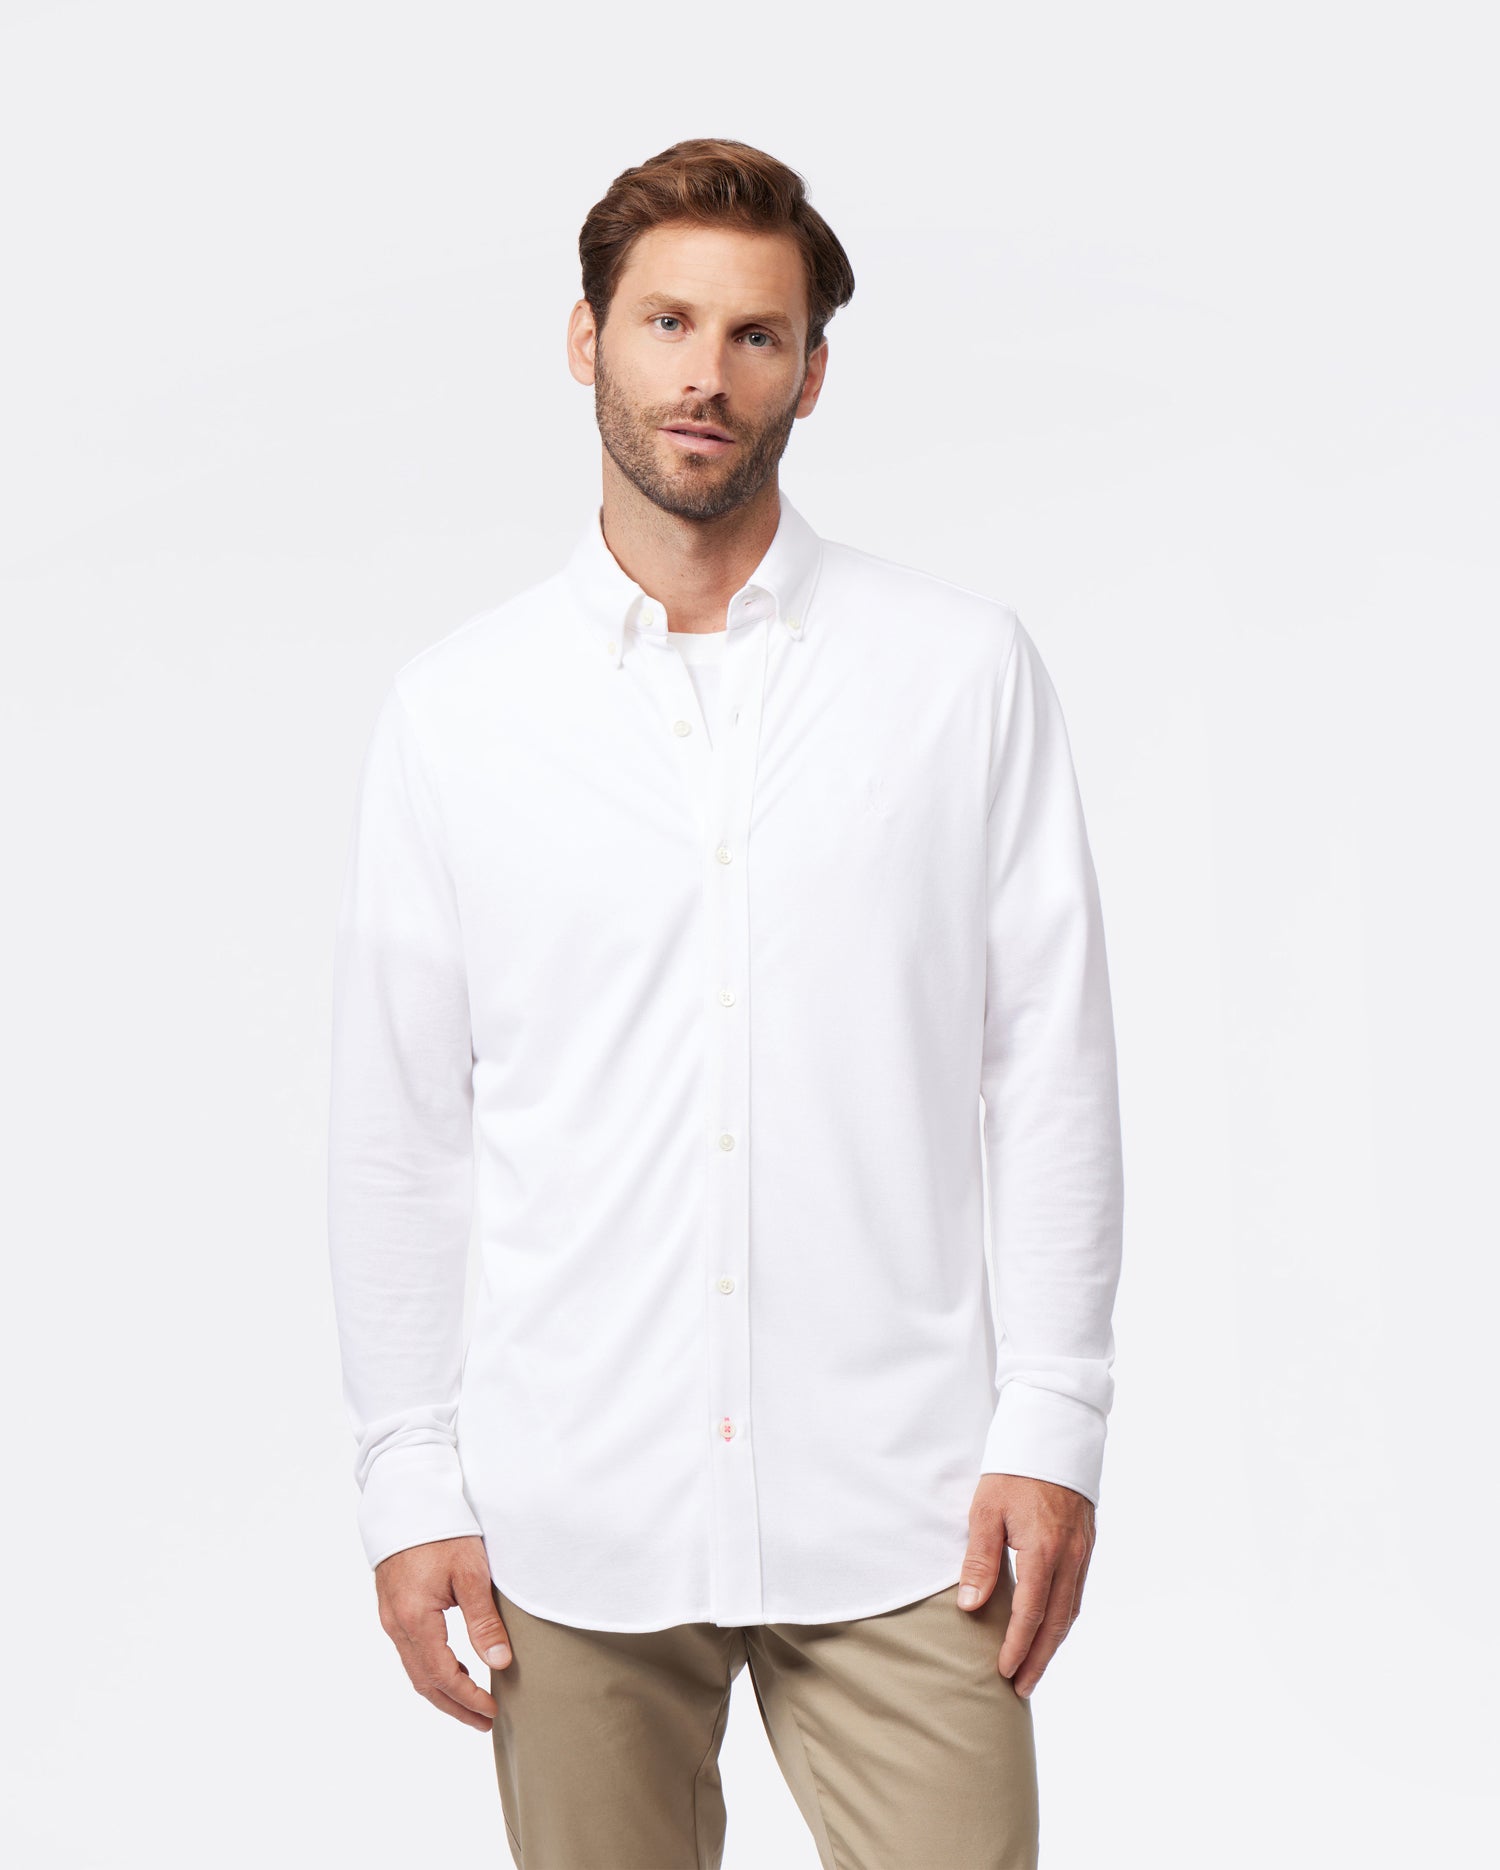 Mens Button Down Shirt Linen Cotton Shirts Casual Long Sleeve